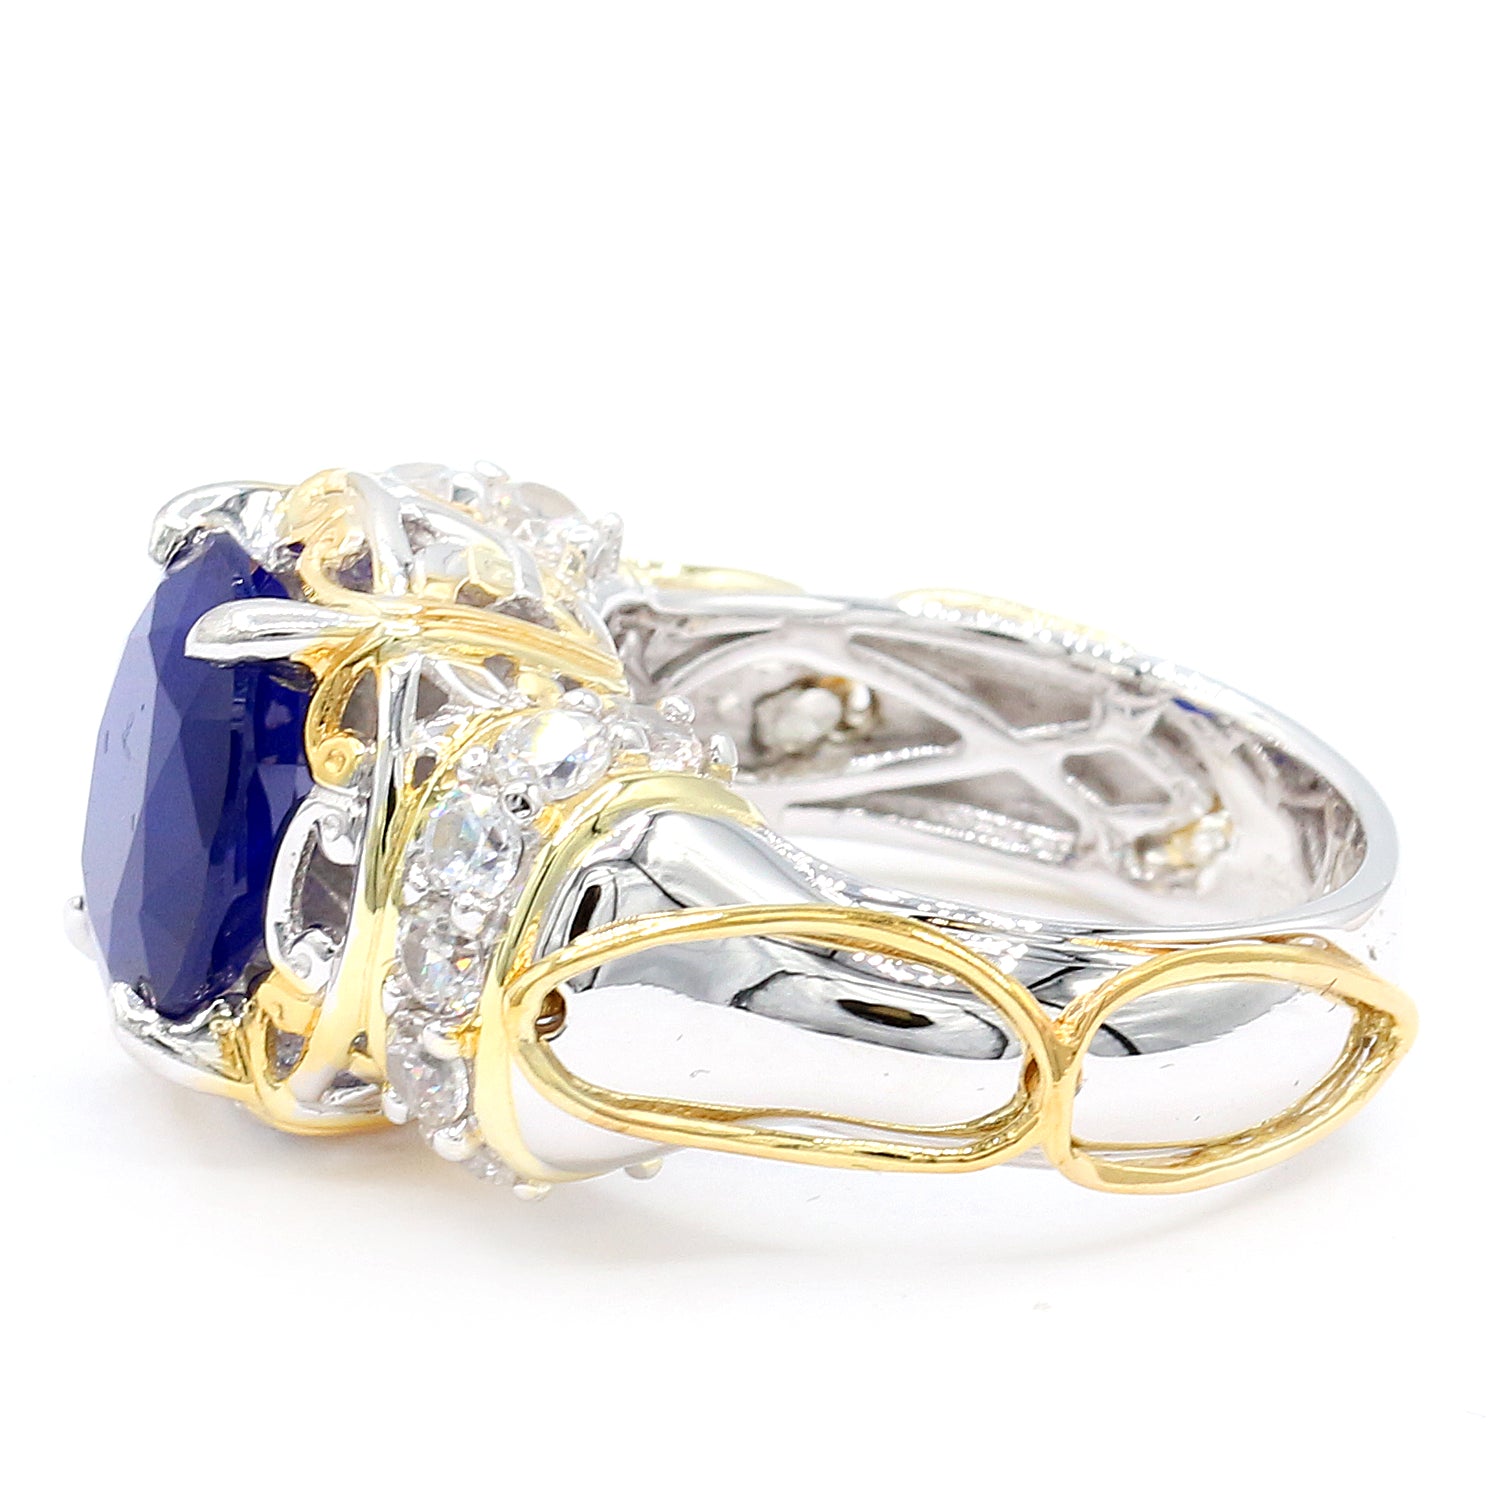 Limited Edition Gems en Vogue 6.10ctw Cobalt Blue Spinel & White Zircon Ring